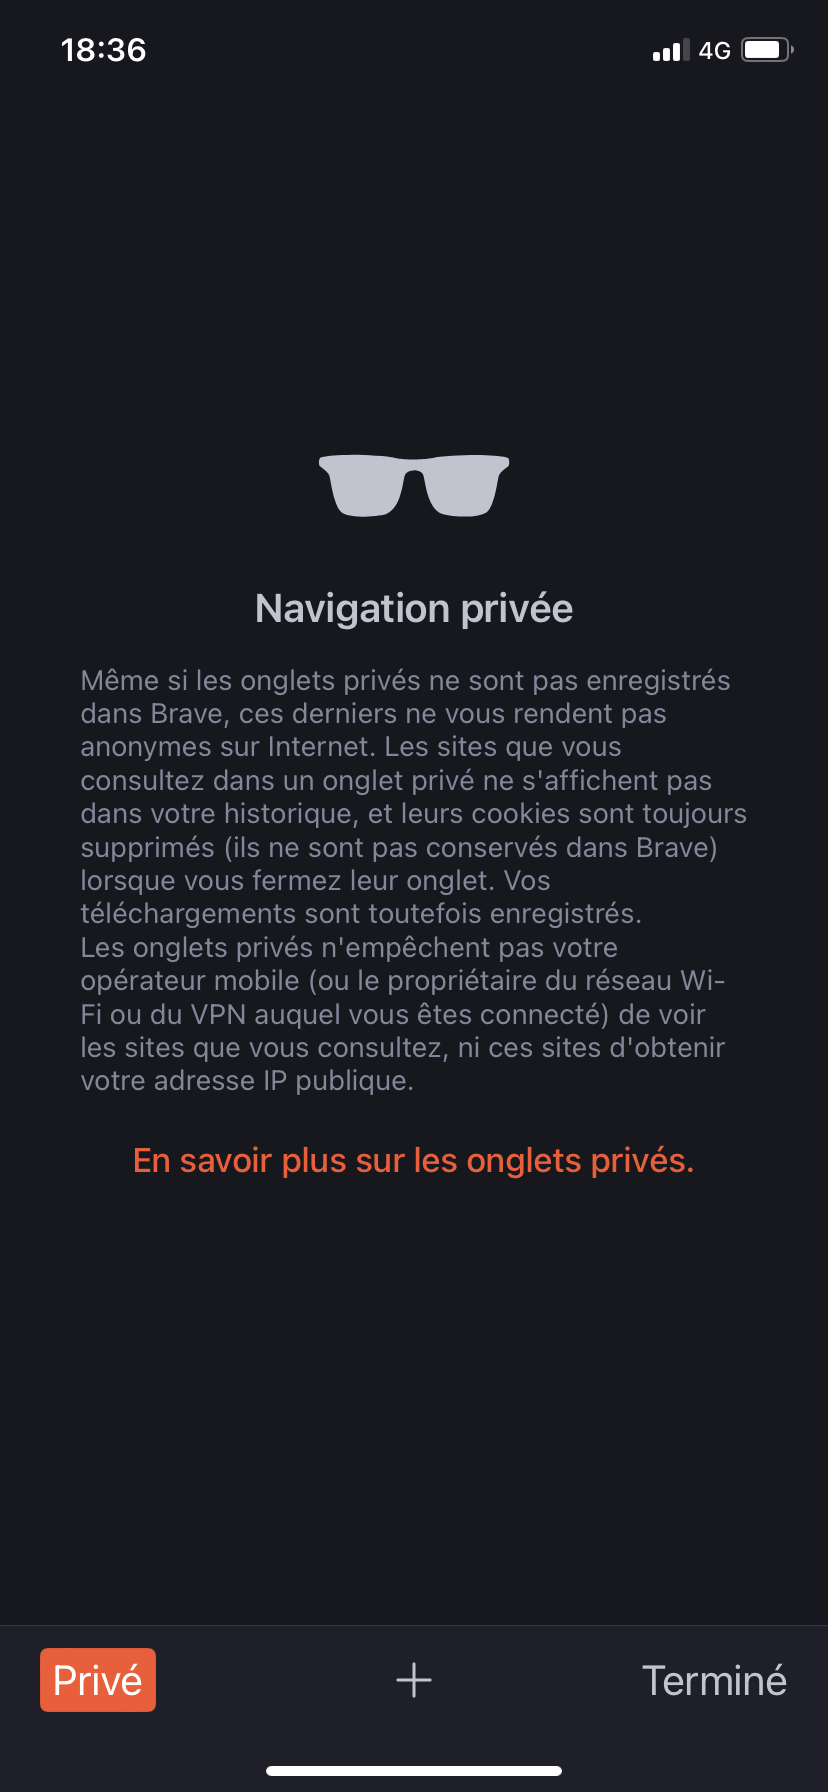 Brave navigation privée mobile 3